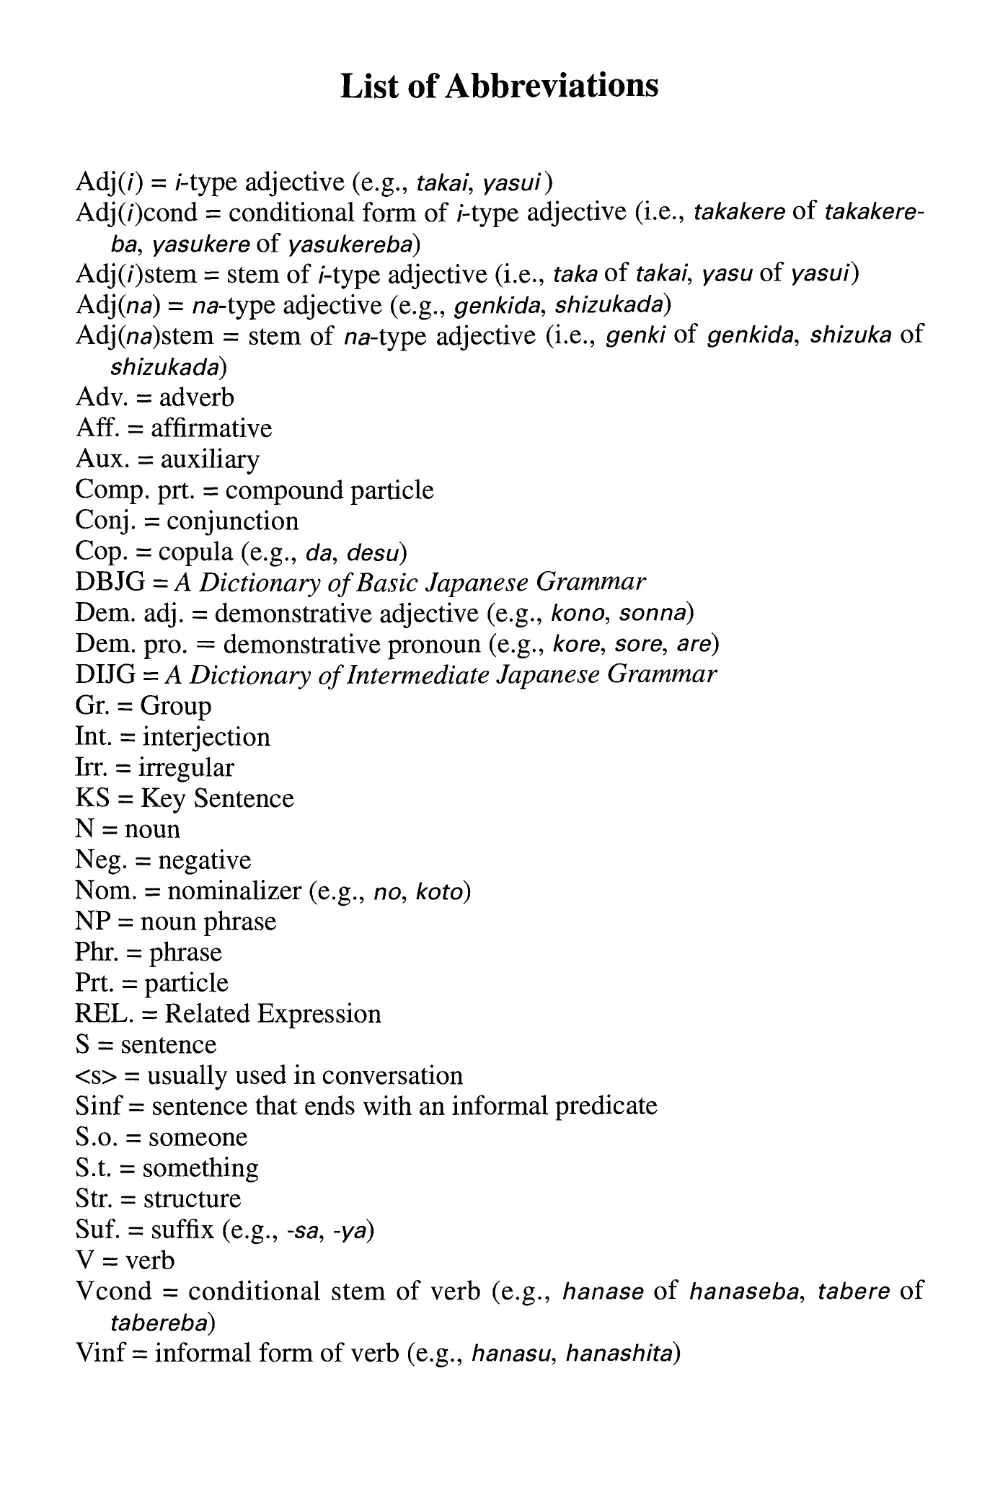 List of Abbreviations